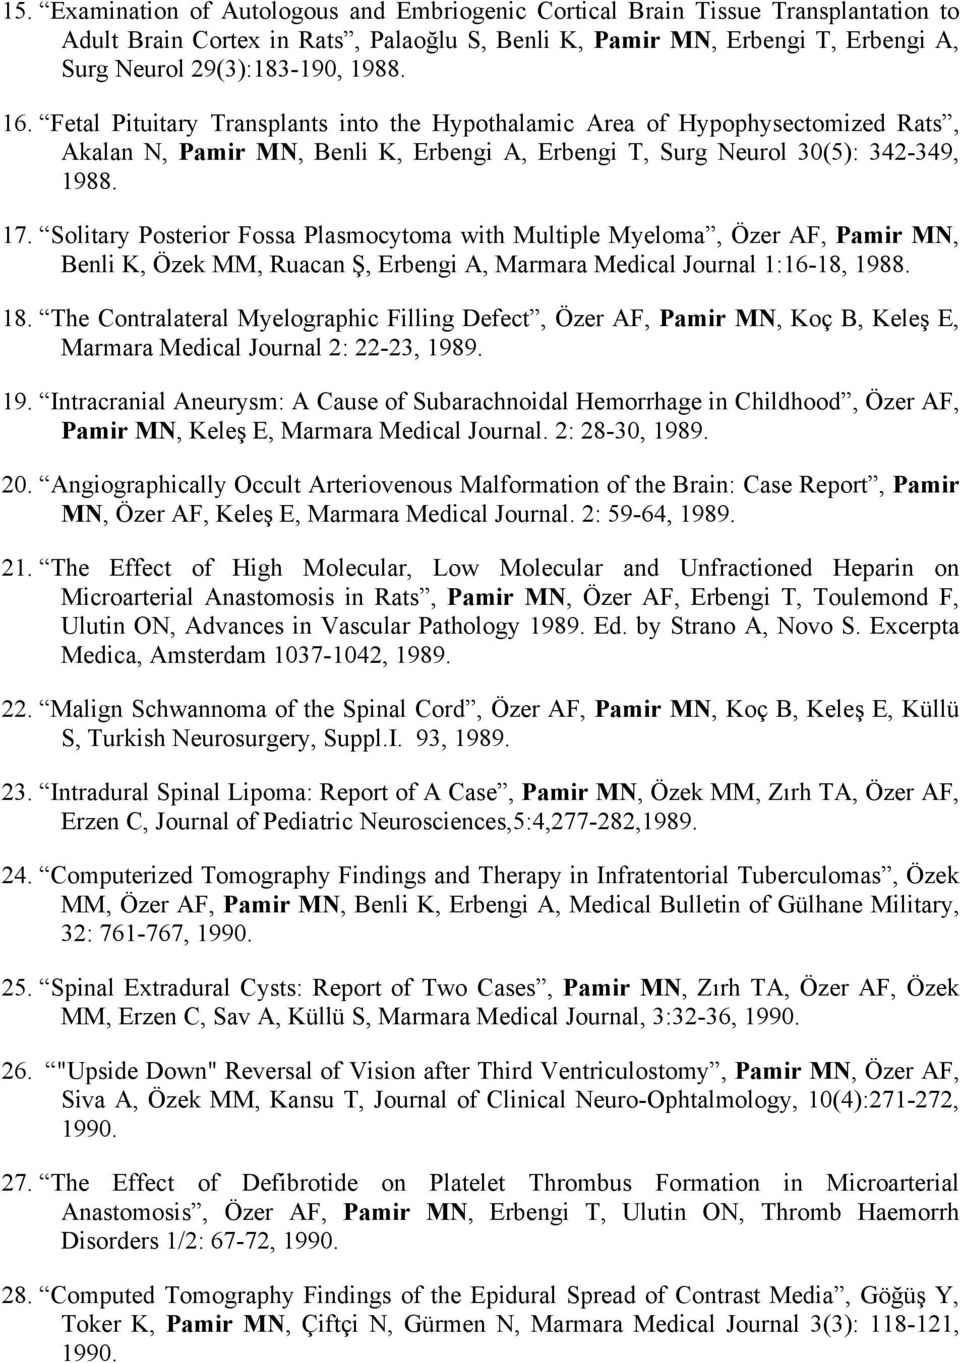 Solitary Posterior Fossa Plasmocytoma with Multiple Myeloma, Özer AF, Pamir MN, Benli K, Özek MM, Ruacan Ş, Erbengi A, Marmara Medical Journal 1:16-18, 1988. 18.